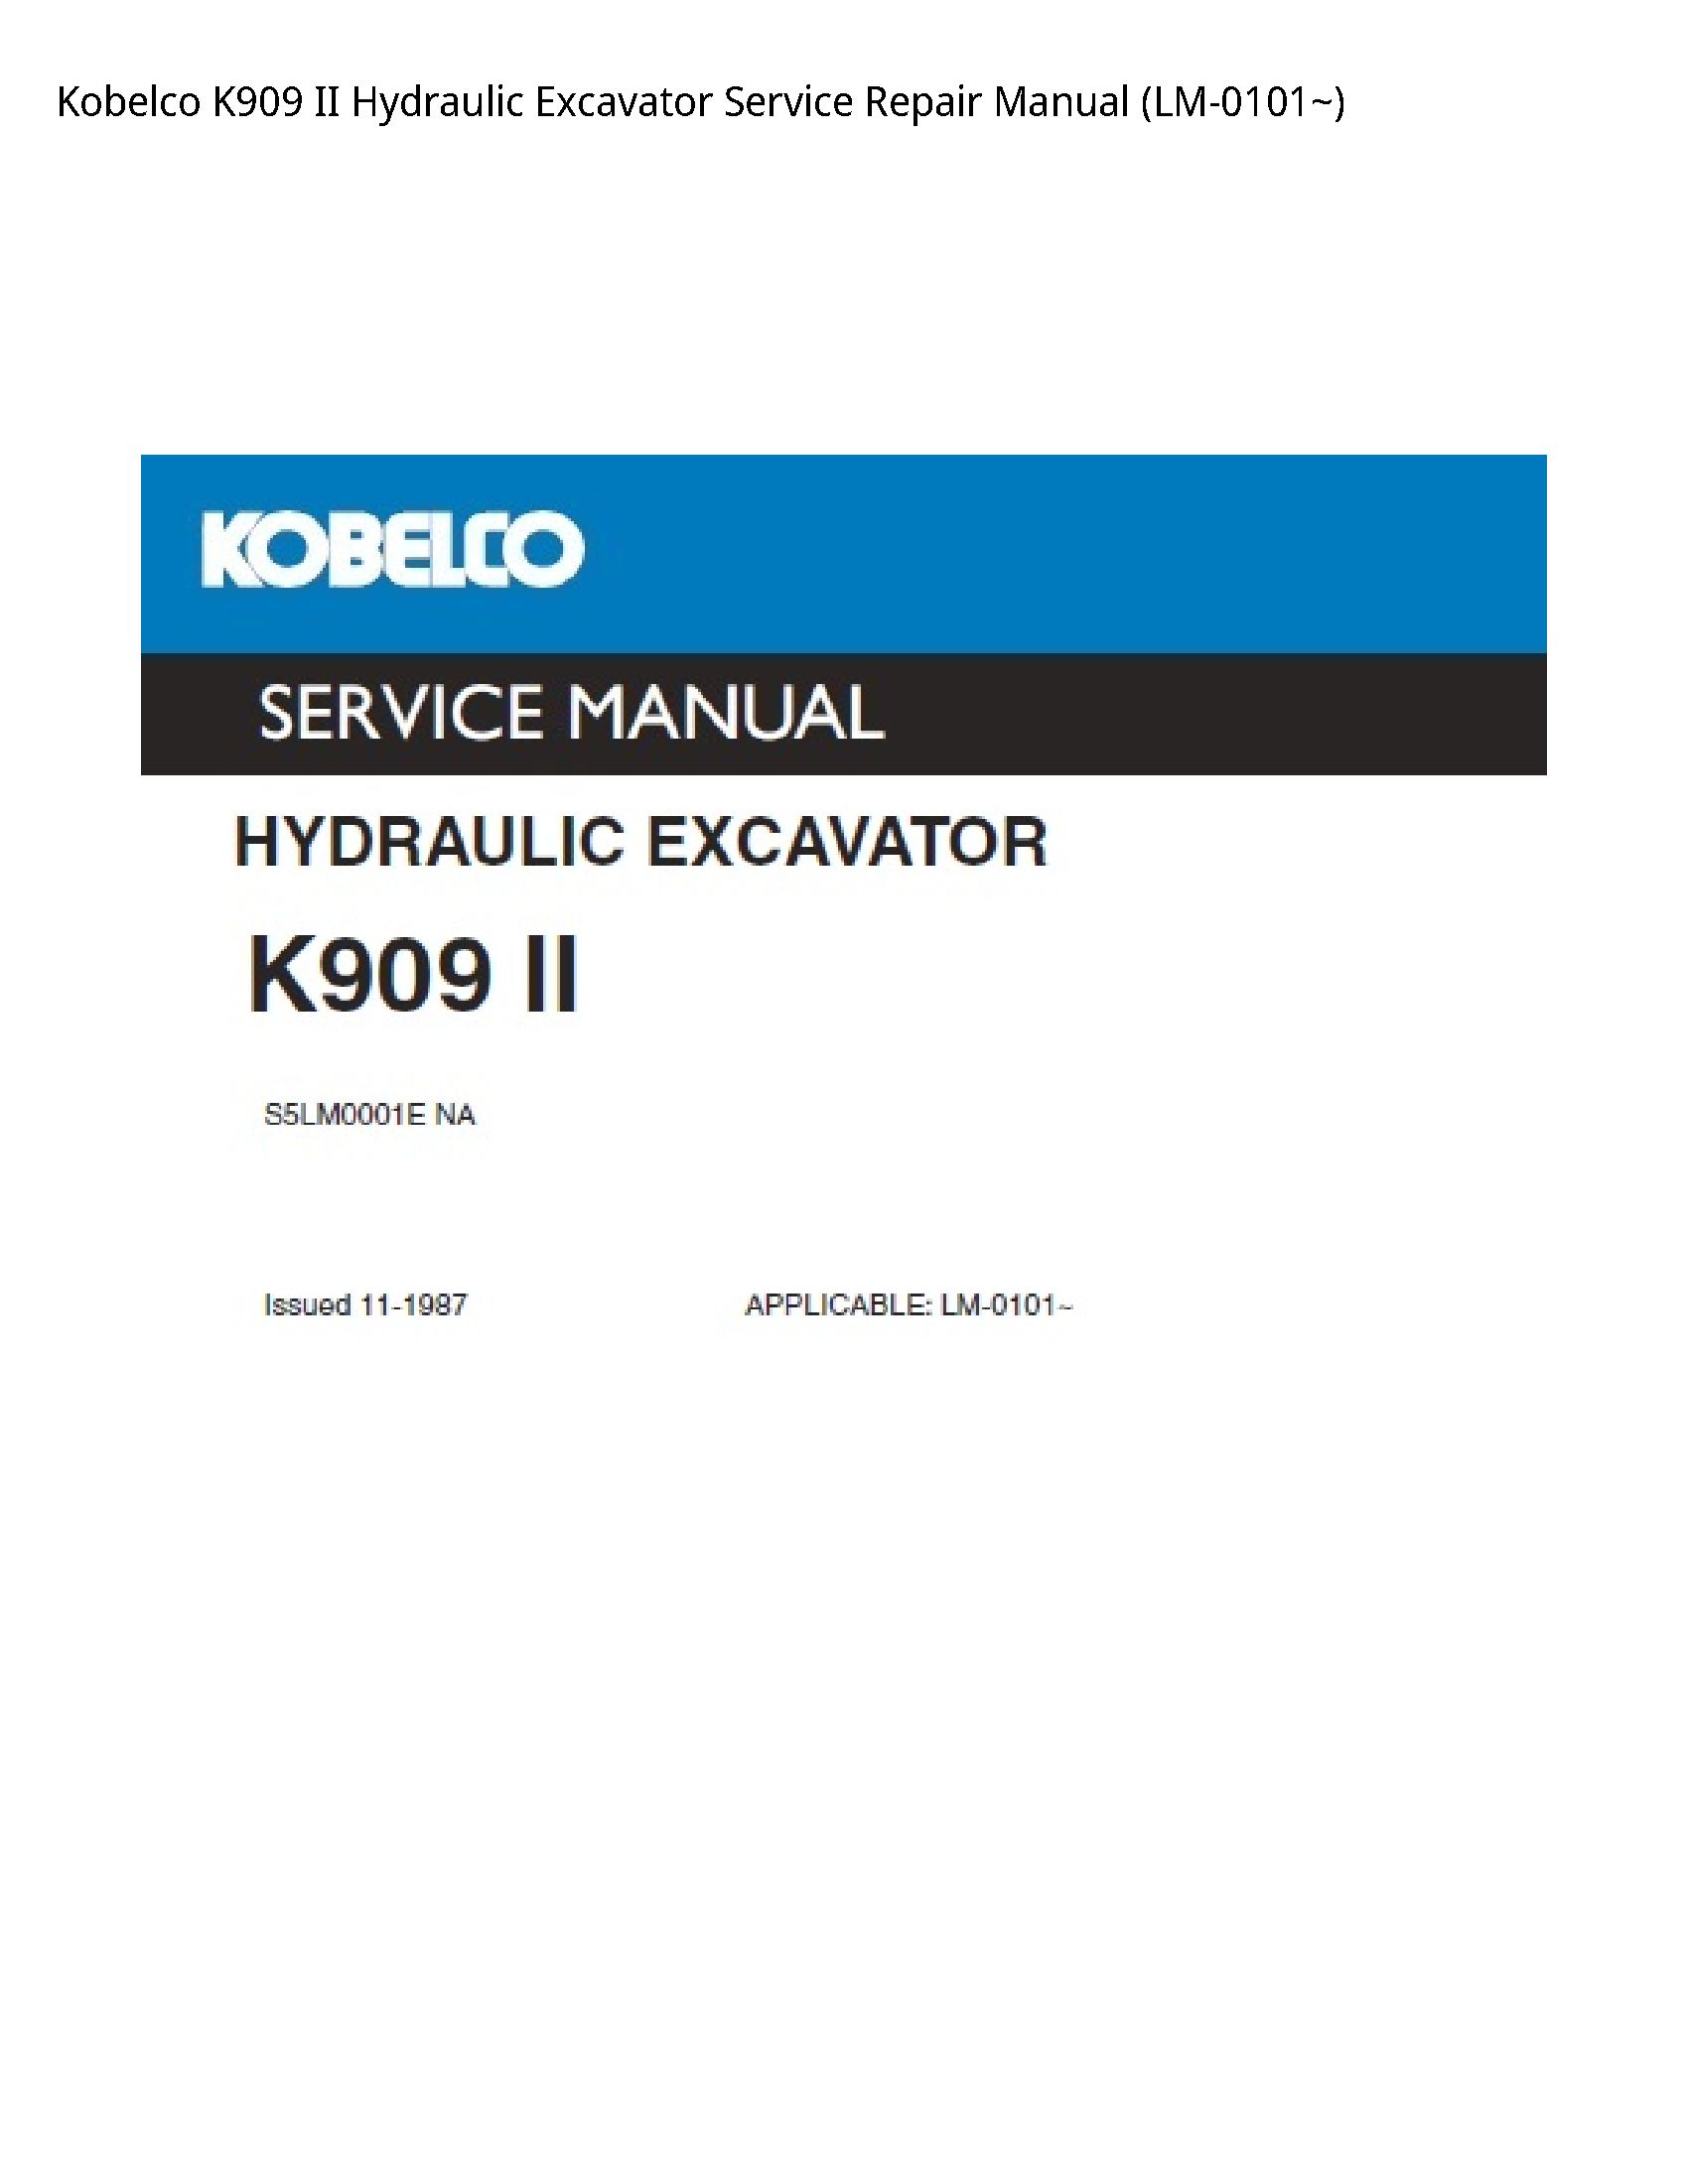 Kobelco K909 II Hydraulic Excavator manual